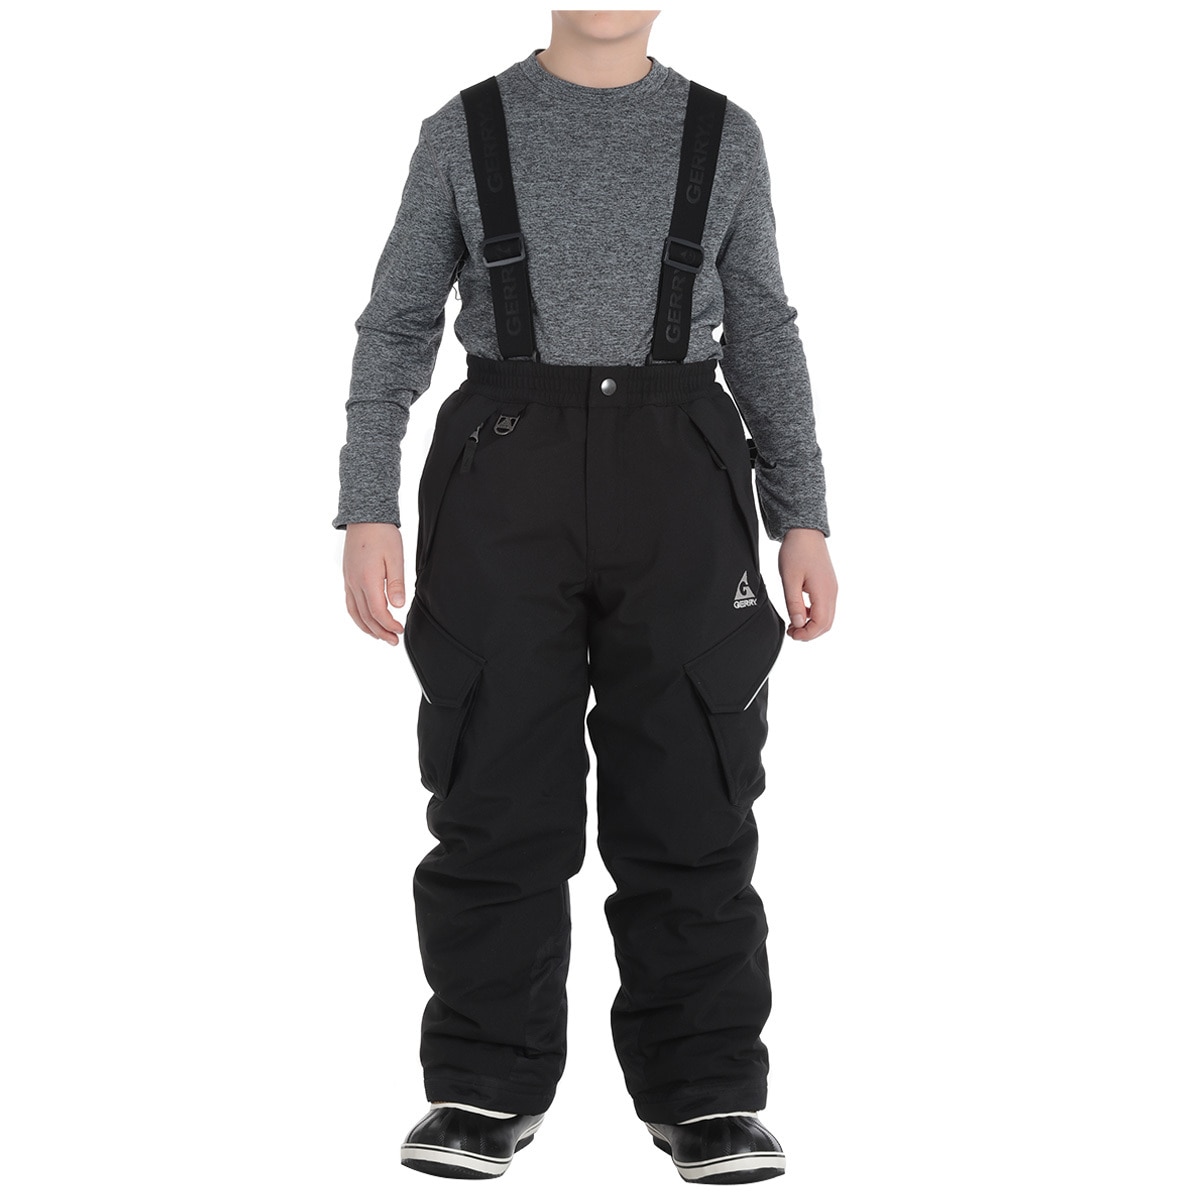 Gerry boys ski pants - Black